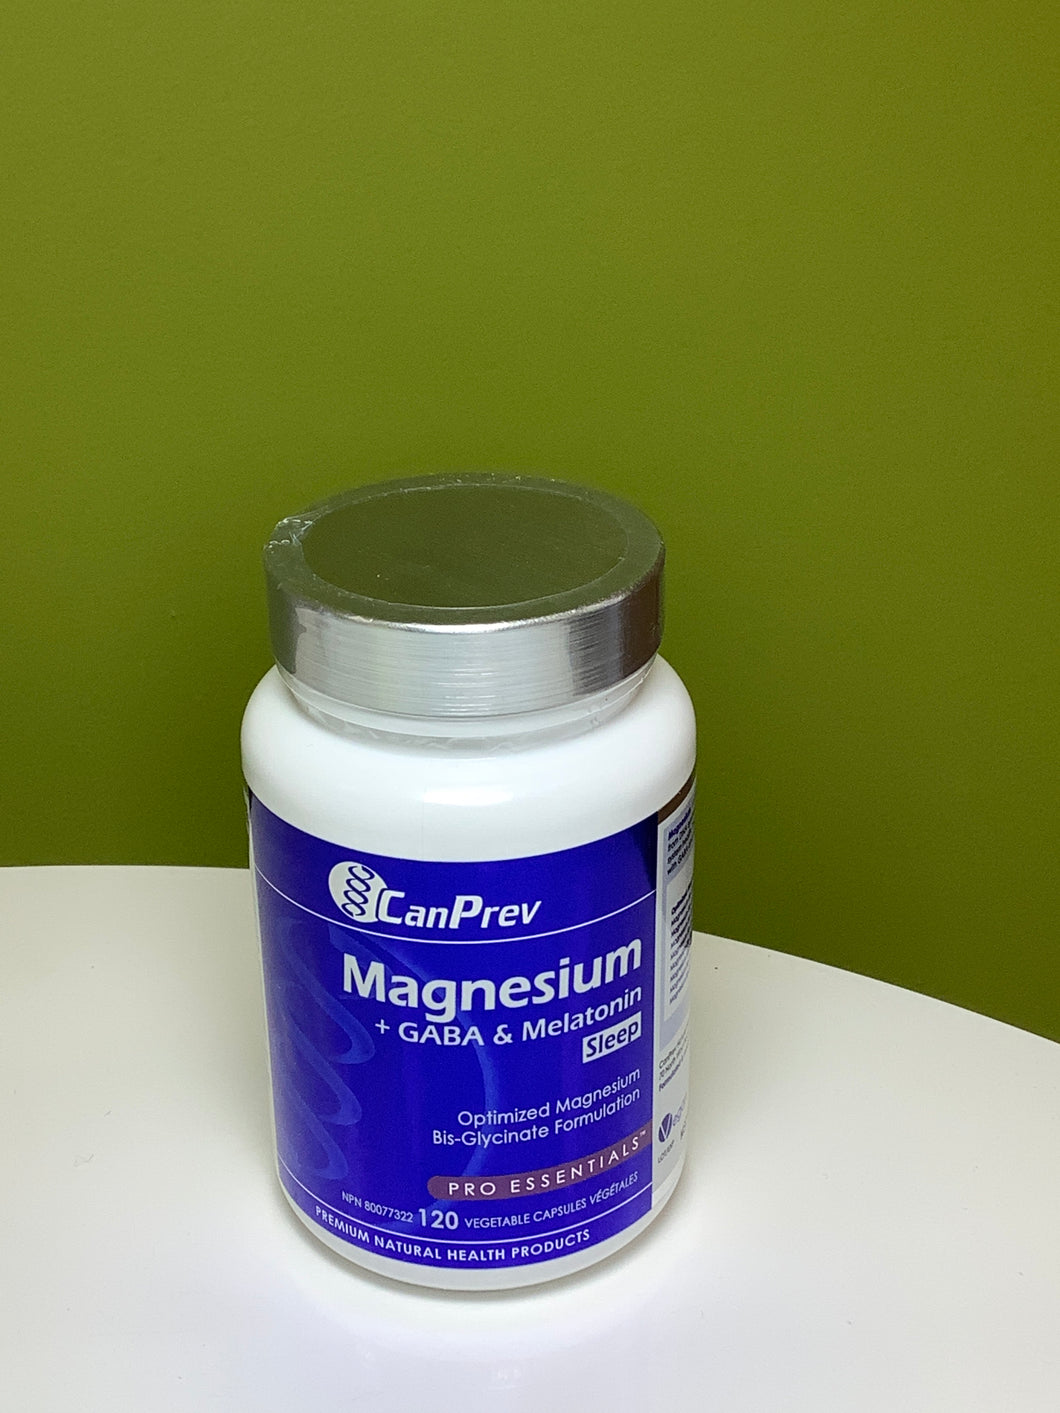 CanPrev Magnesium + GABA & Melatonin